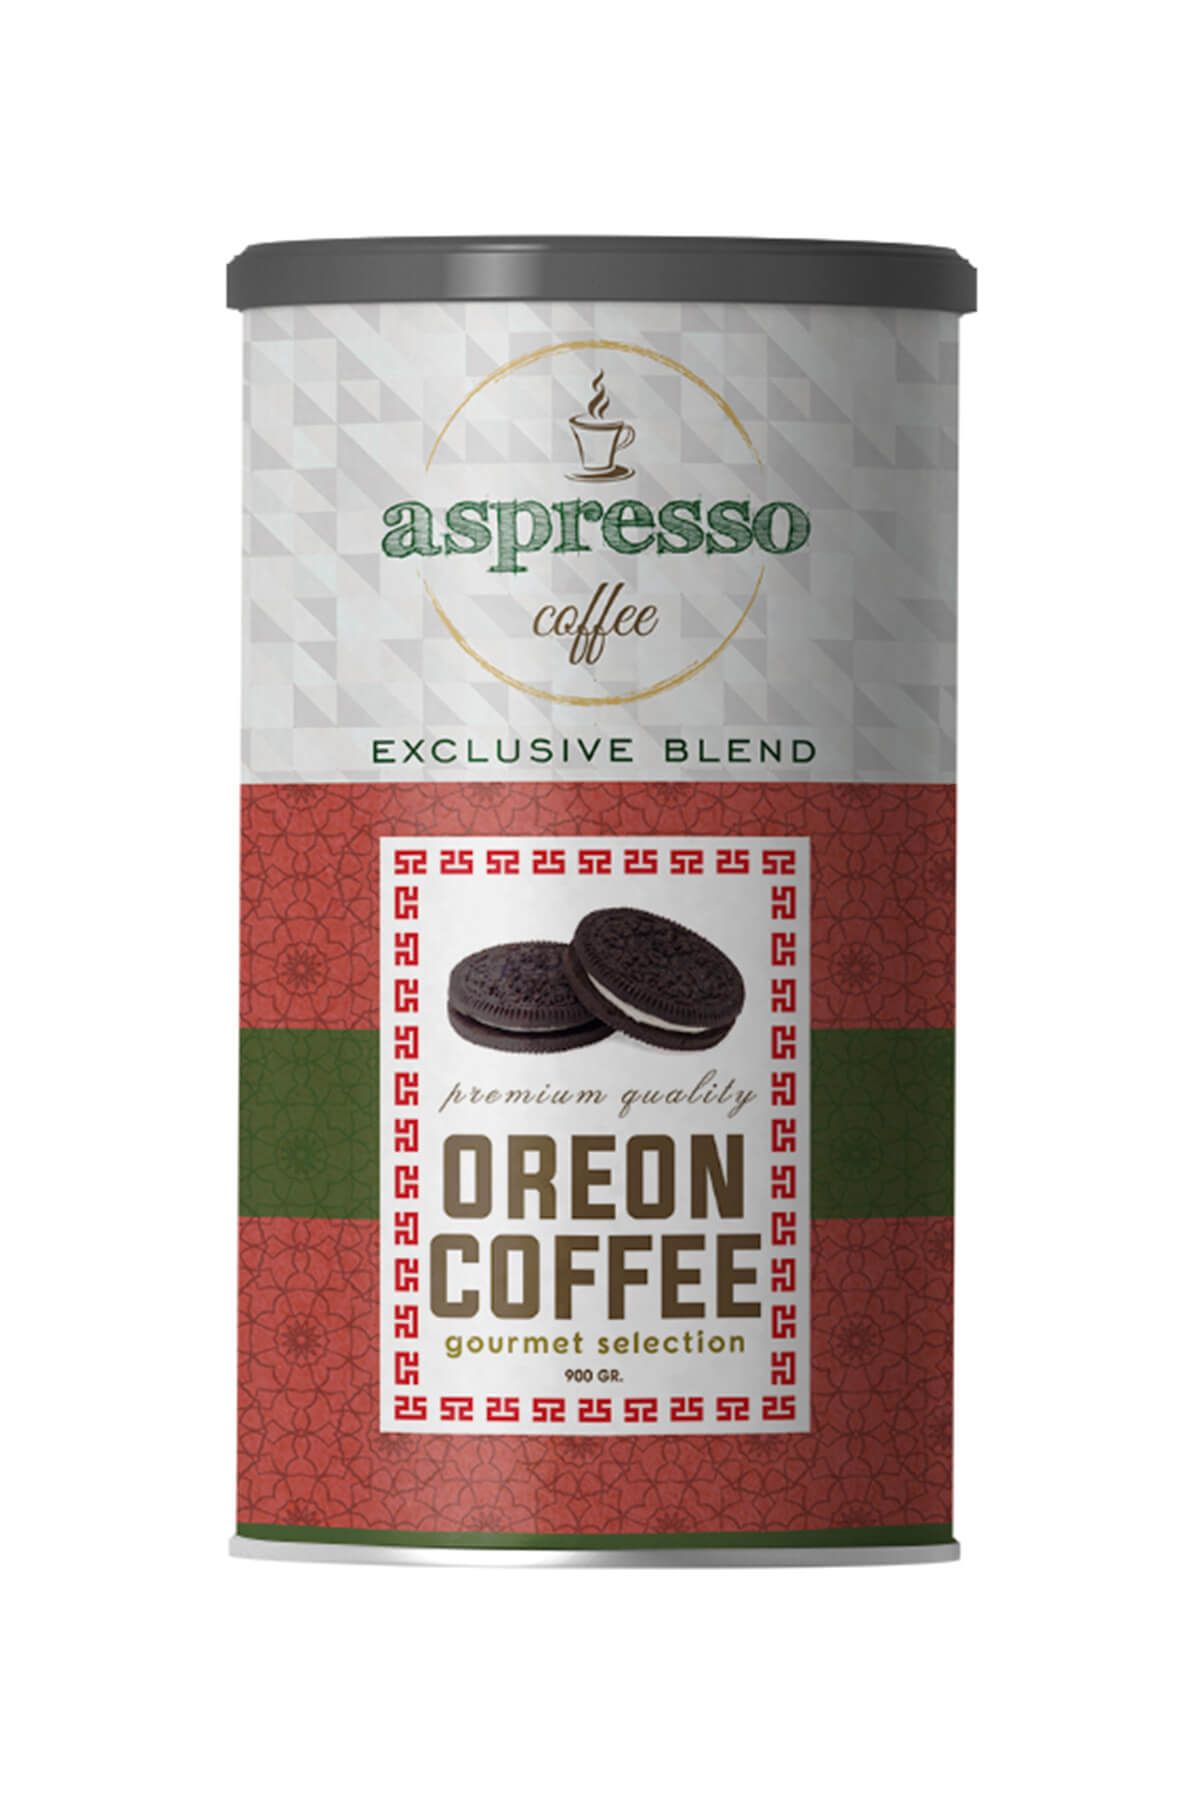 aspresso Oreon Coffee 900 gr